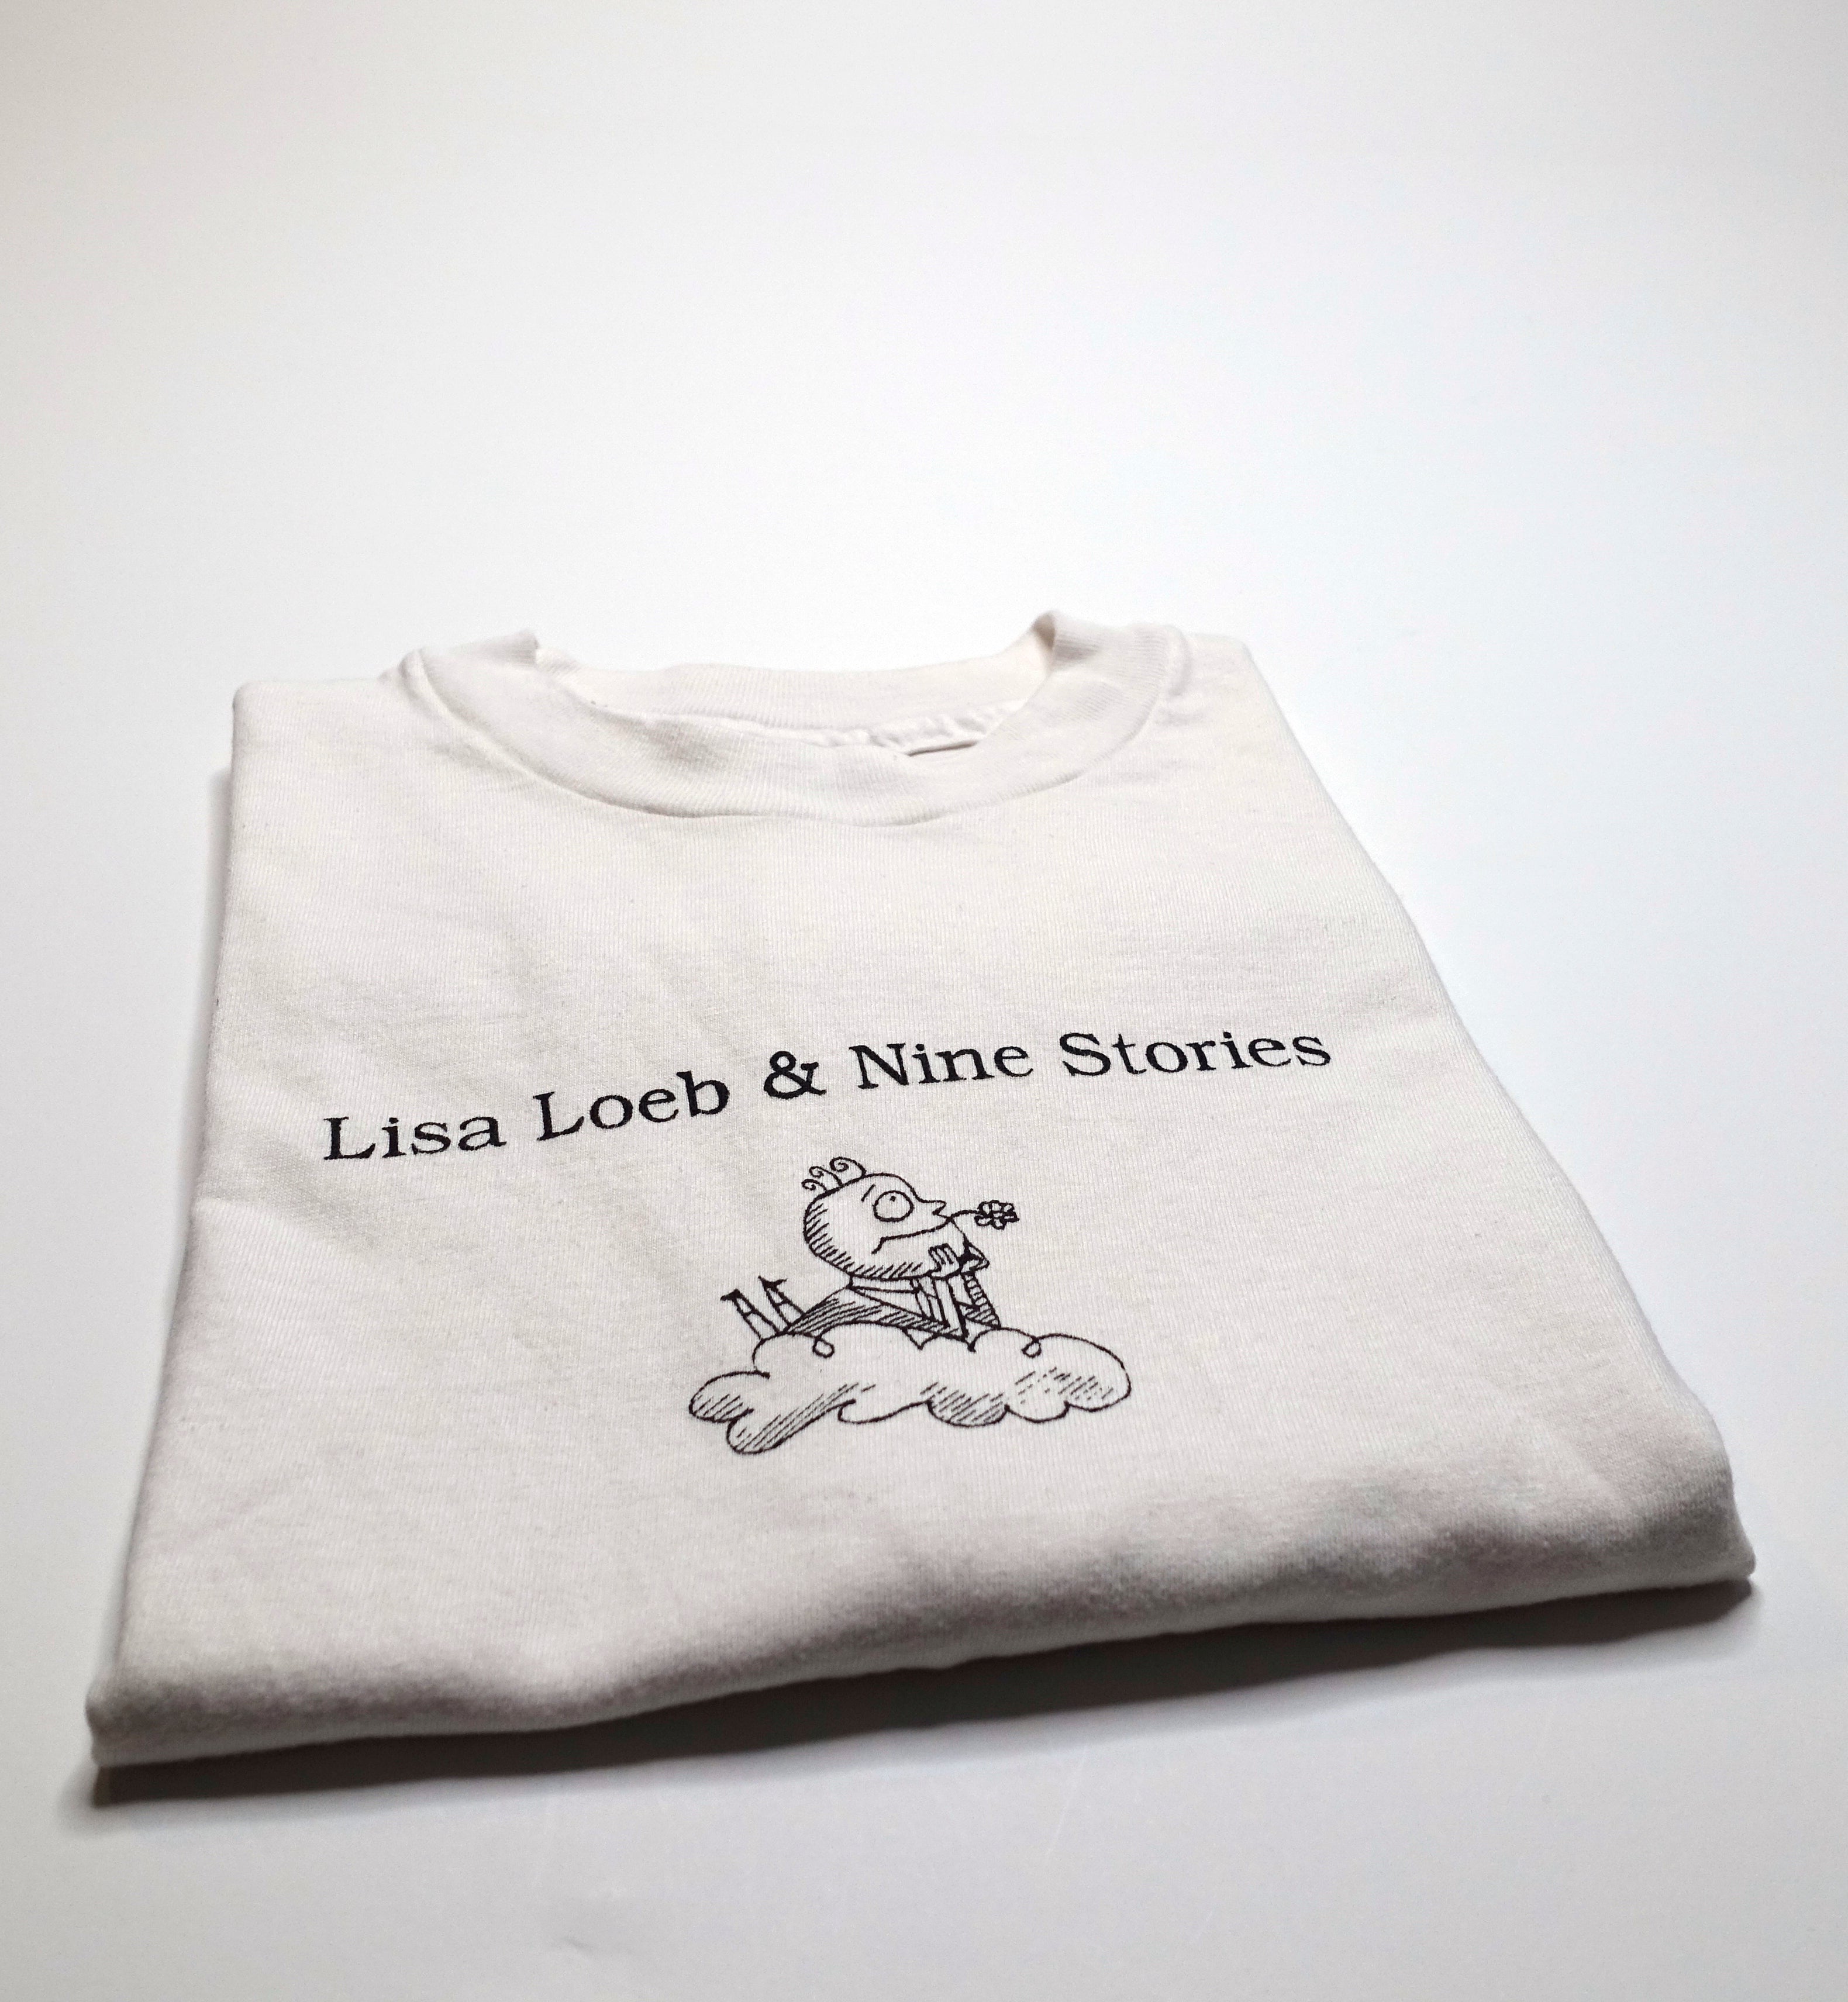 Lisa Loeb & Nine Stories – Tails 1995 Tour Shirt Size Large